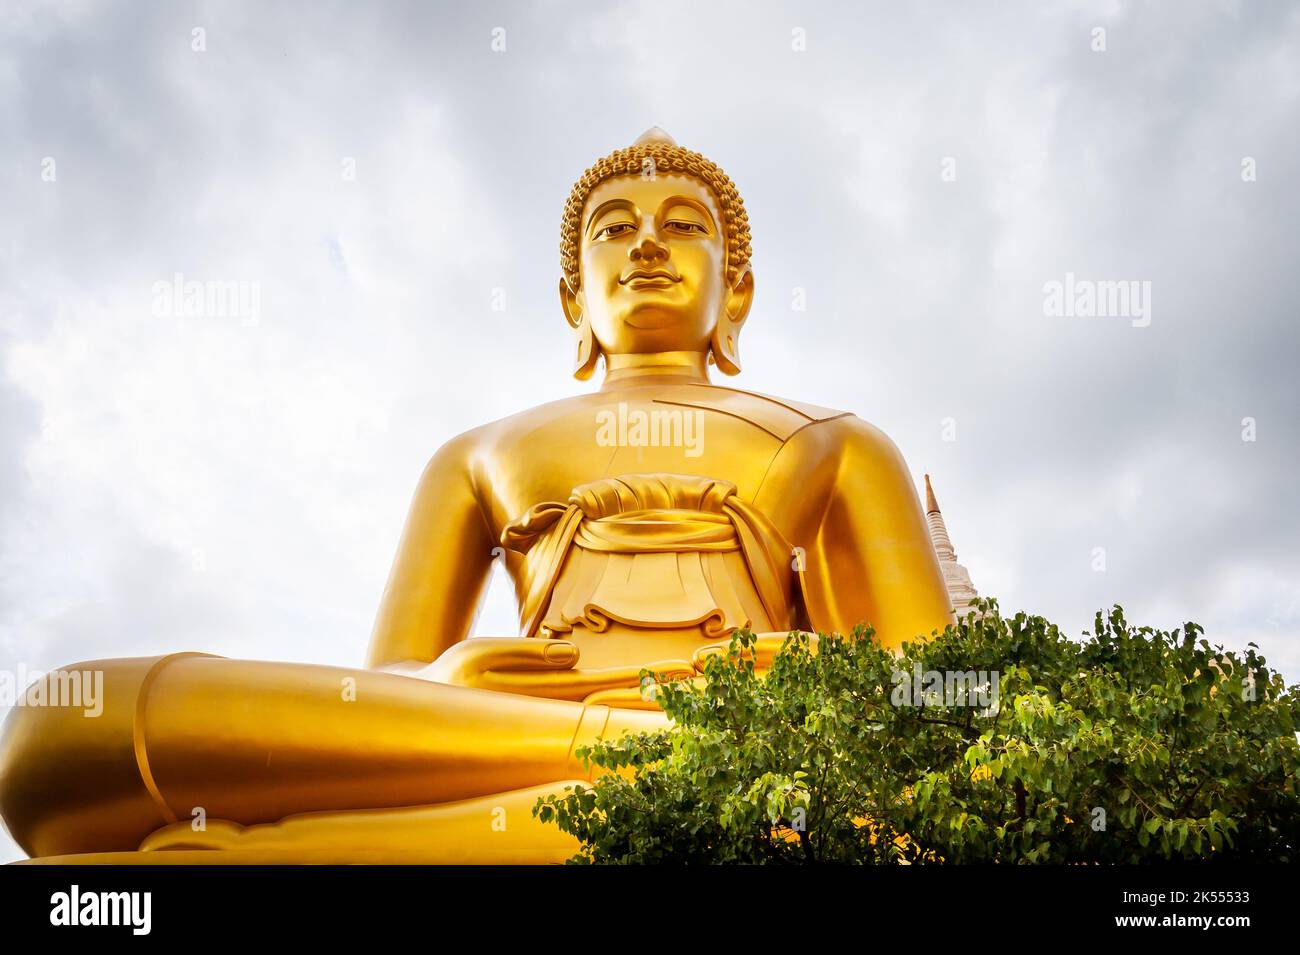 The giant golden Buddha looms large above the city of Bangkok Thailand at Wat Paknam. Temple full name; Wat Pak Nam Phasi Cheroen. Stock Photo